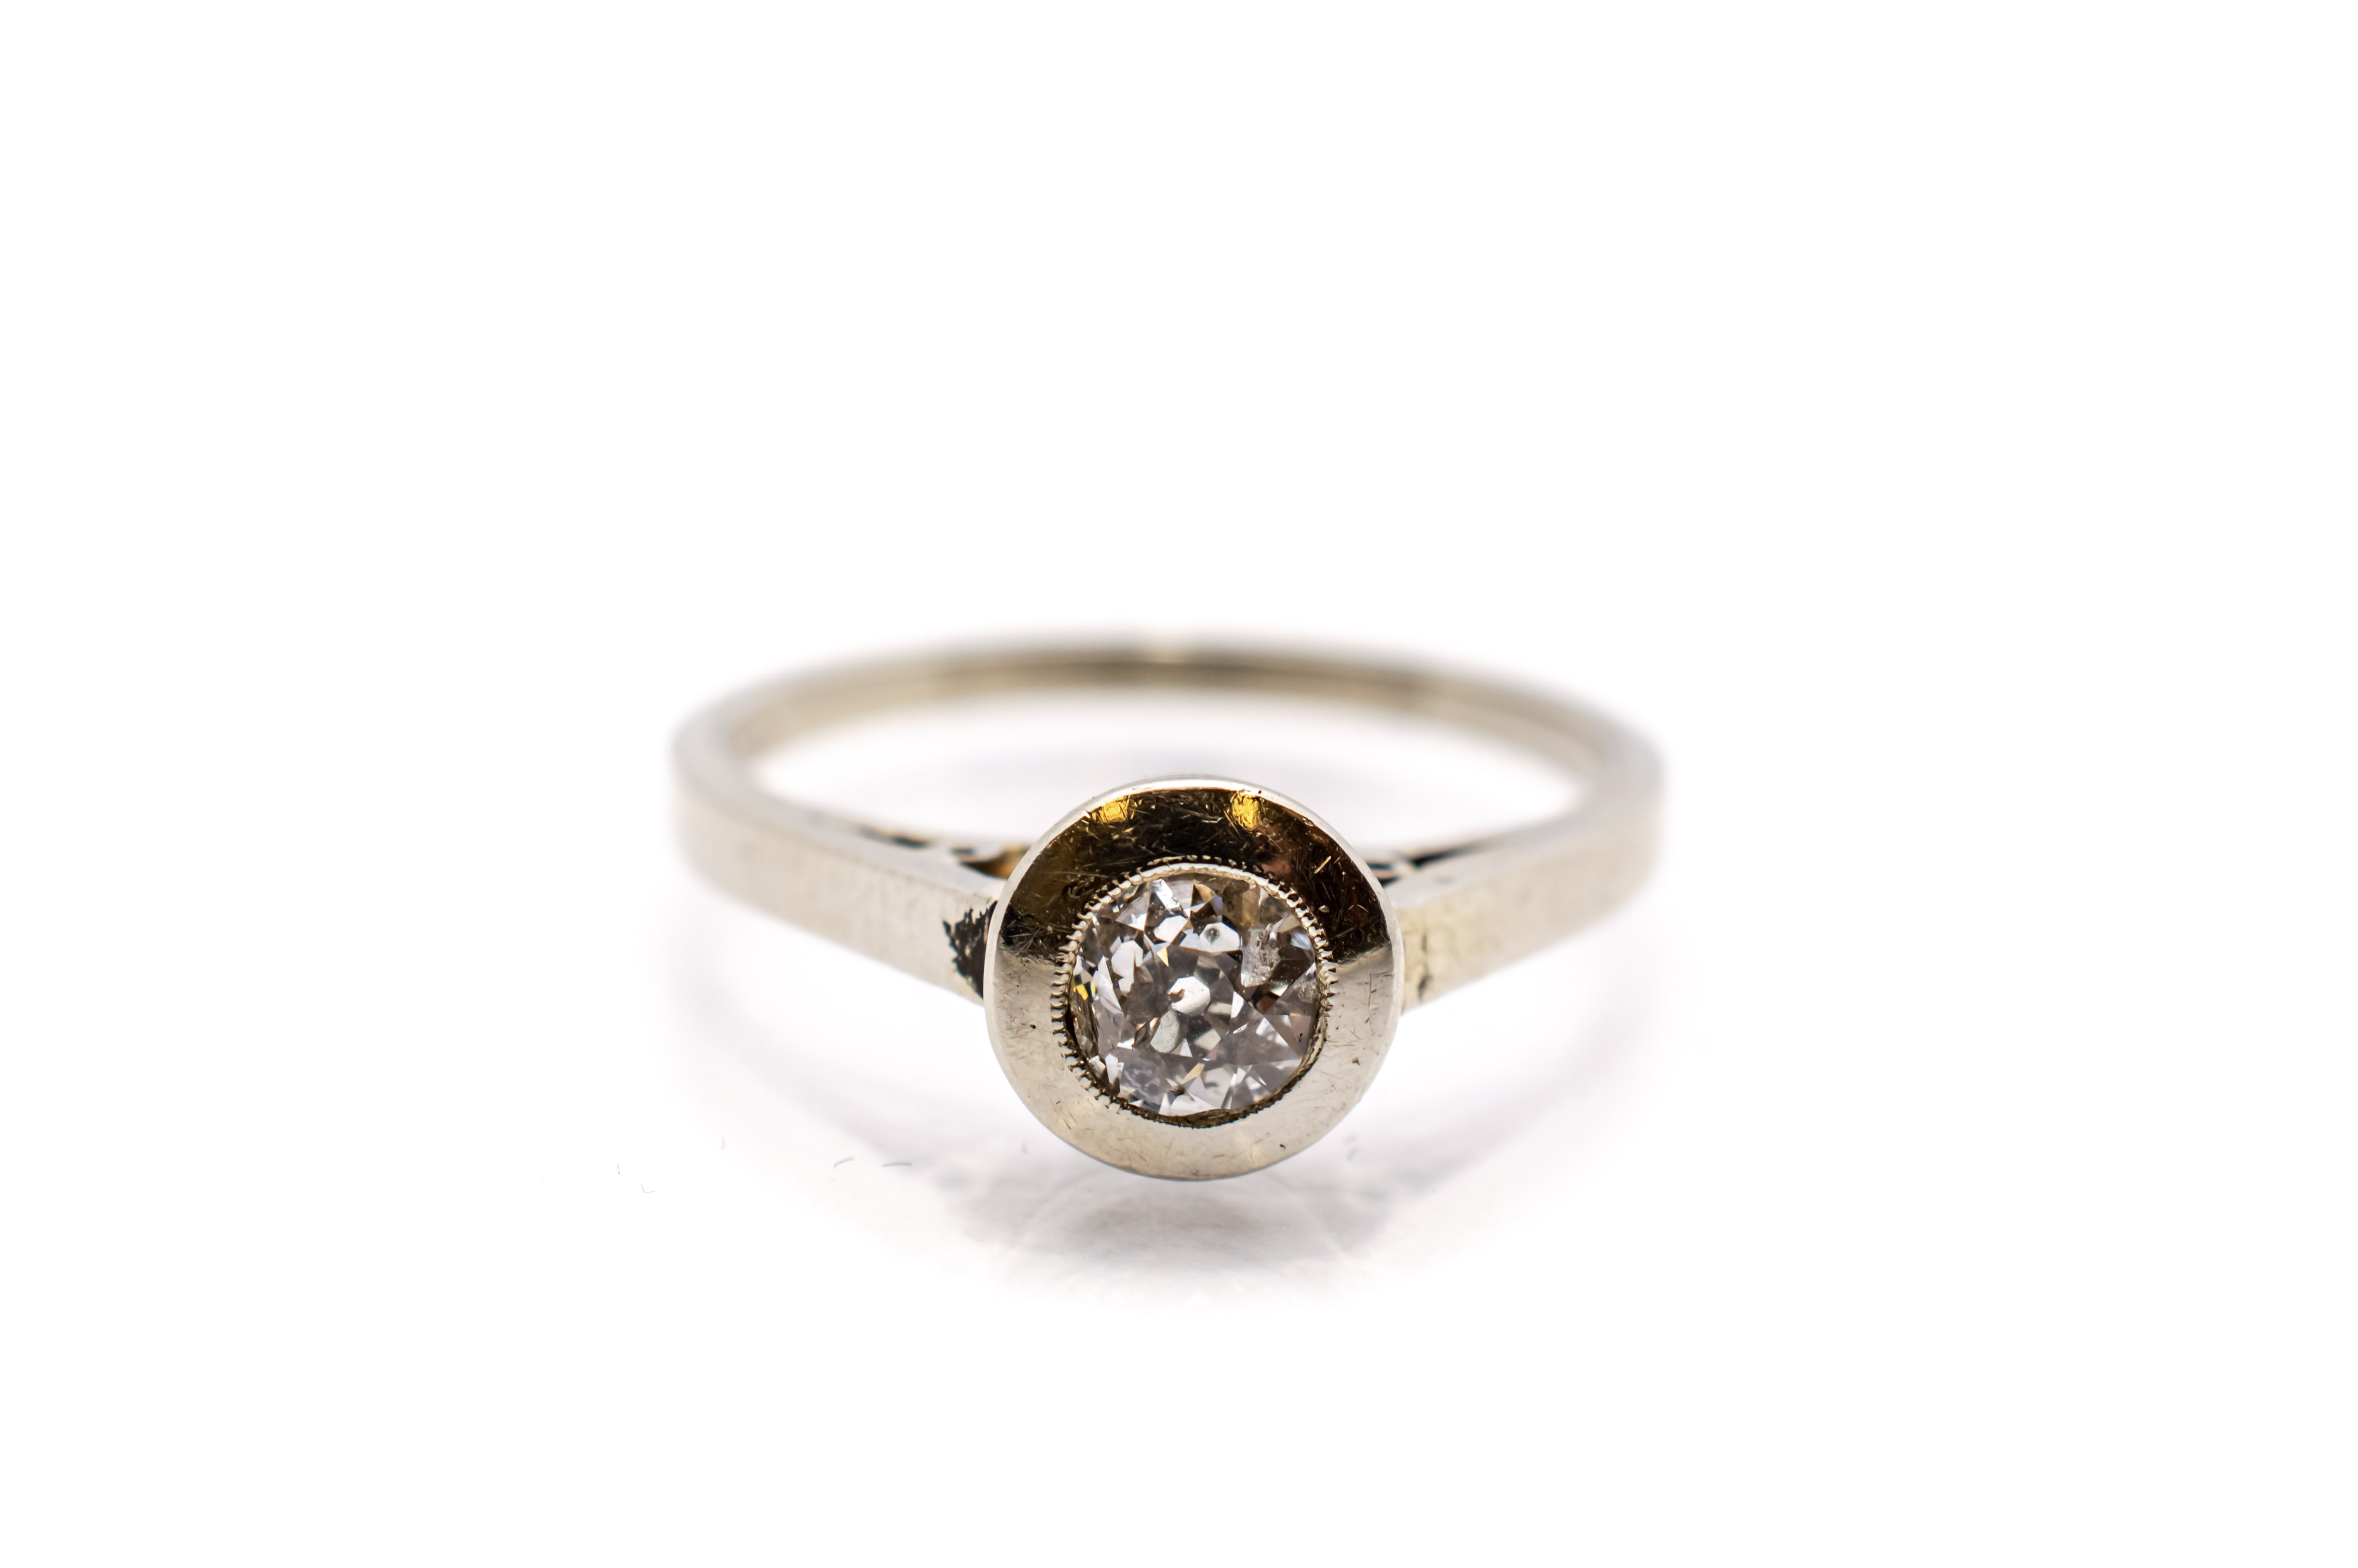 Art deco prsten z bílého zlata s diamantem - solitér, 1. republika, vel. 54